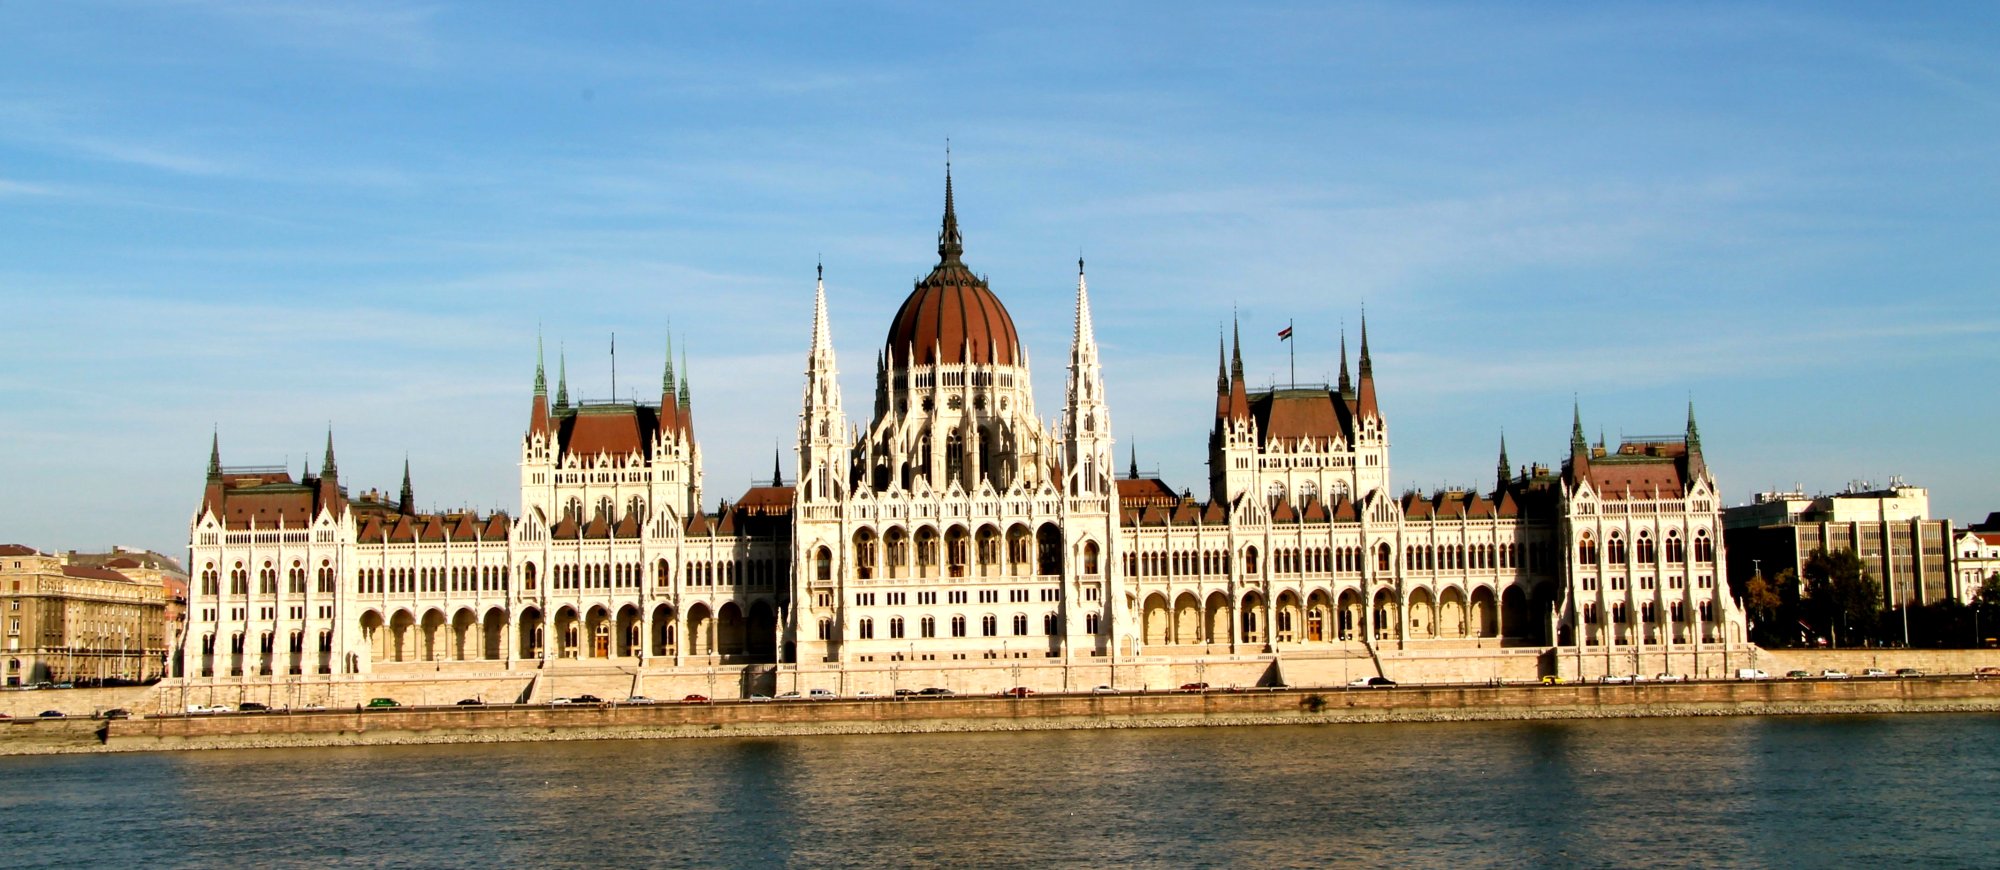 Parliament, Budapest - Google image from http://jakeincopenhagen.files.wordpress.com/2012/10/5-budapest-parliament.jpg